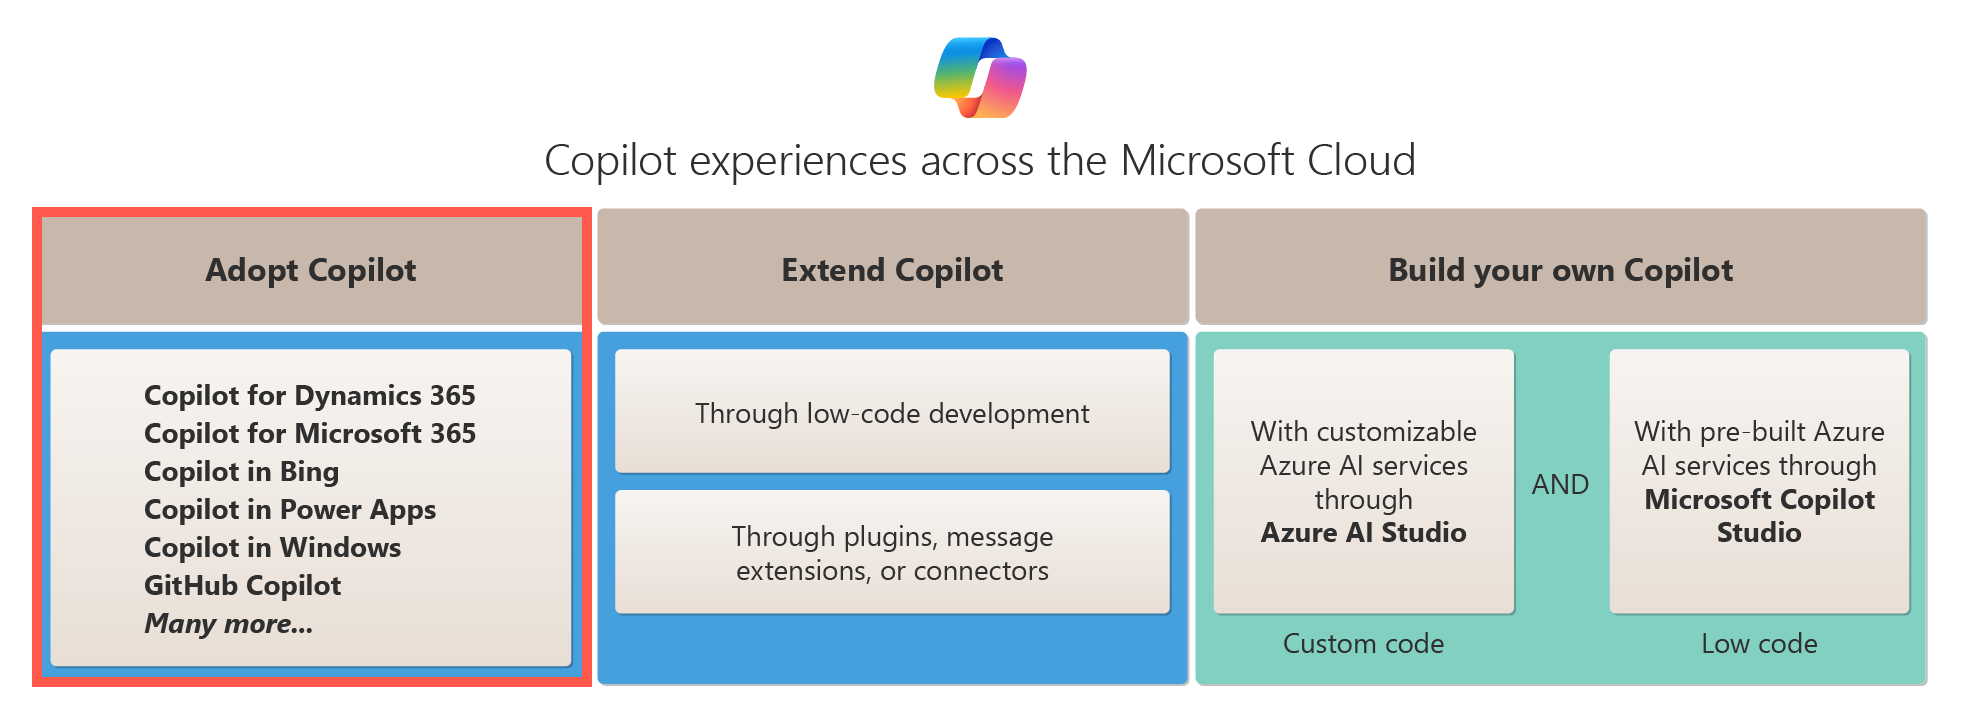 Microsoft Cloud 全体の Copilot の導入オプションを示す図。